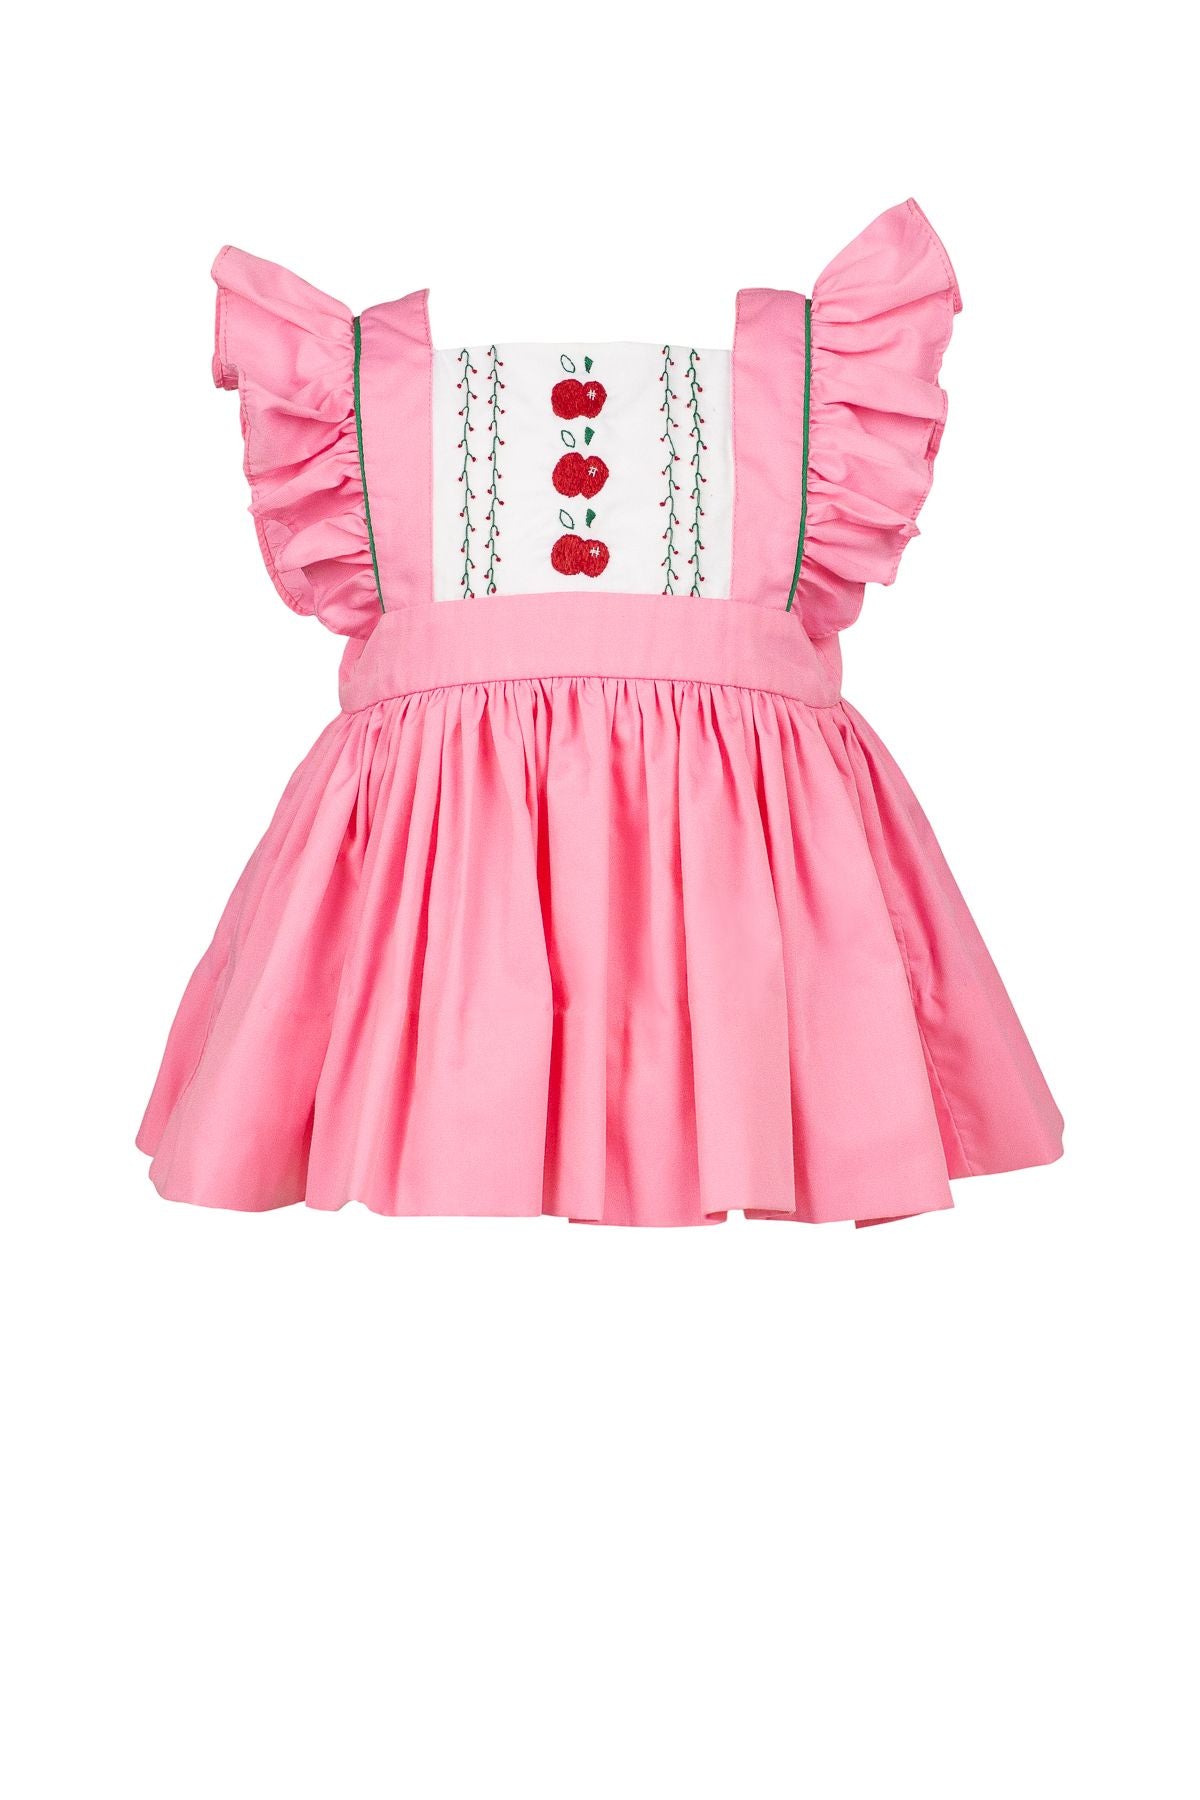 Audrey Apple Pinafore Dress